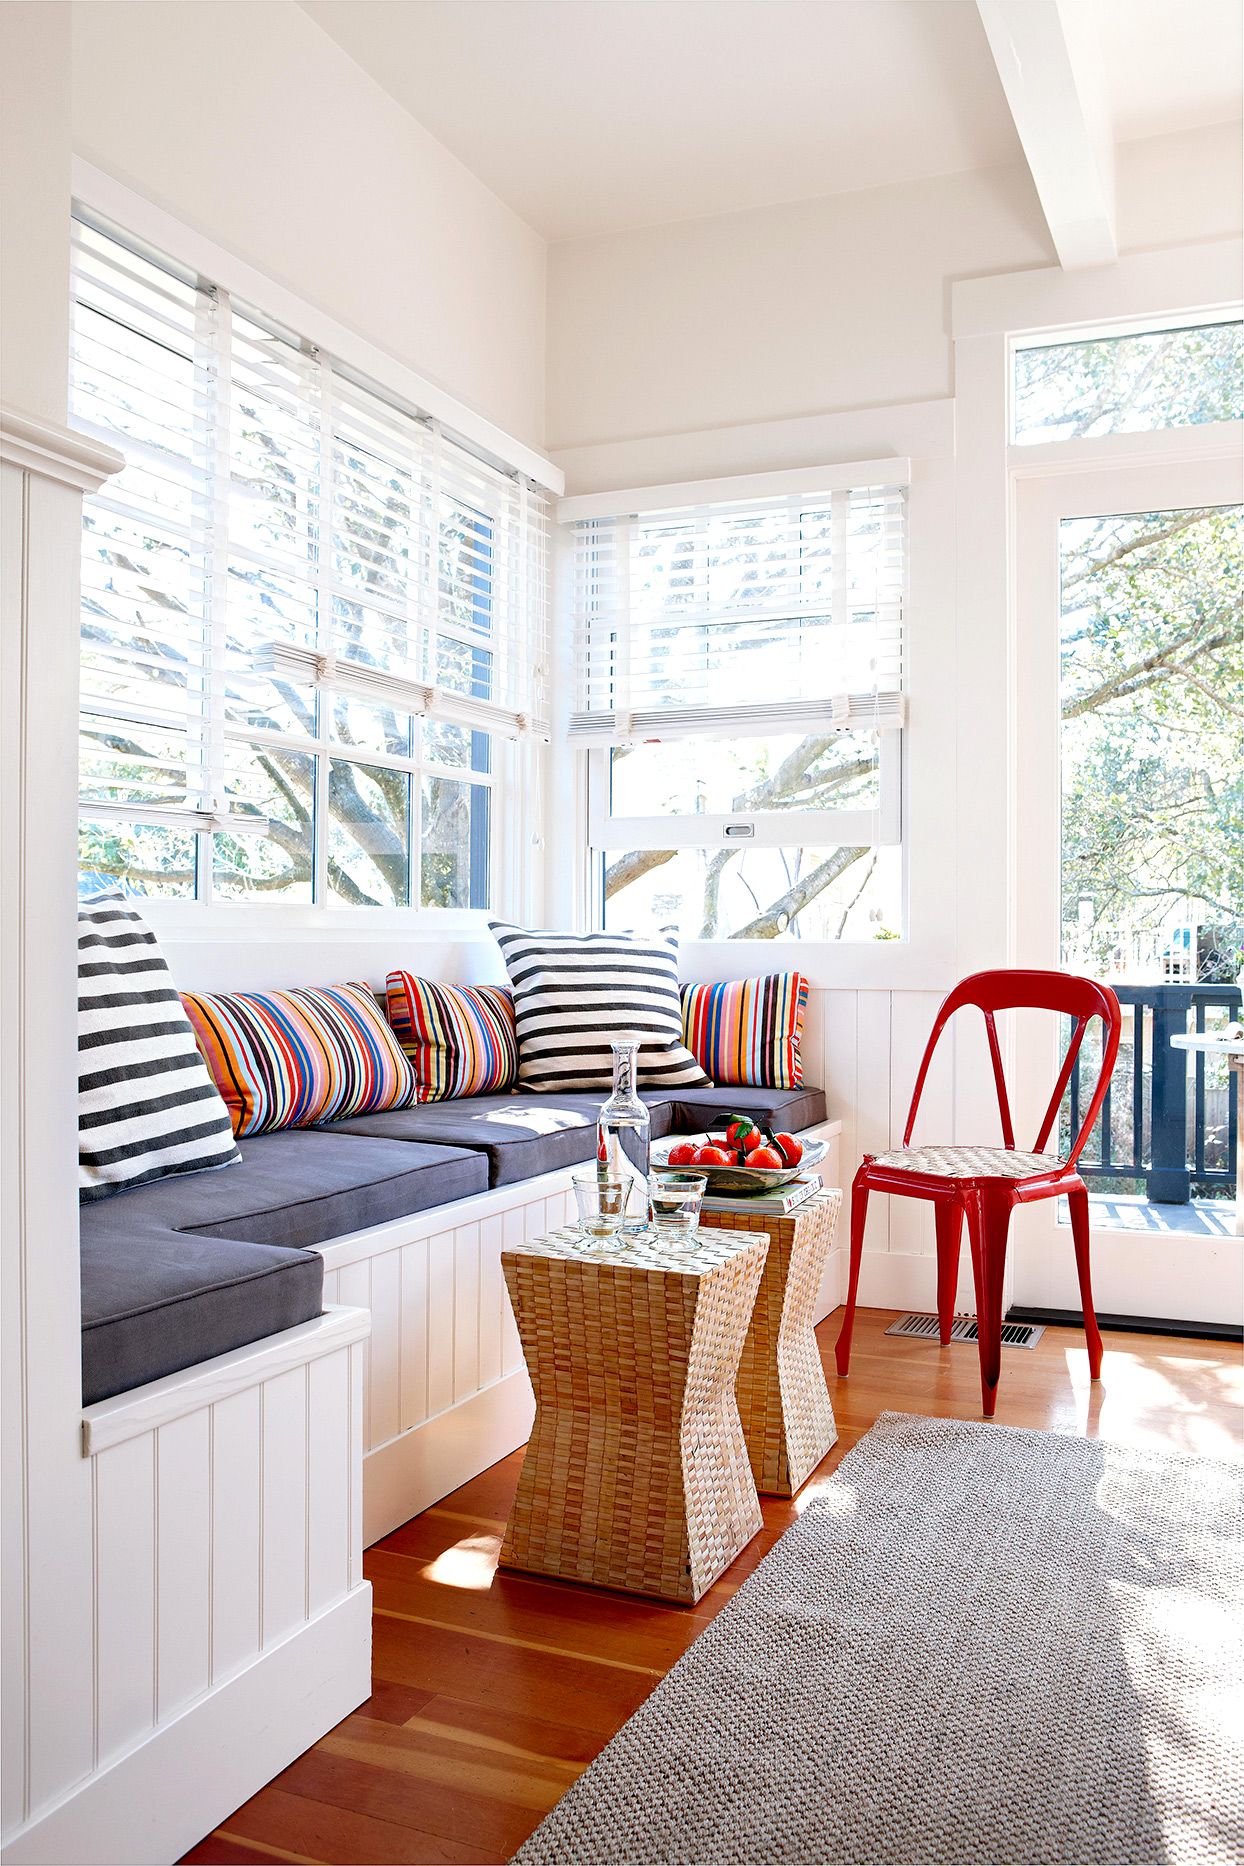 15 Small Living Room Furniture Arrangement Ideas That Maximize Space ...